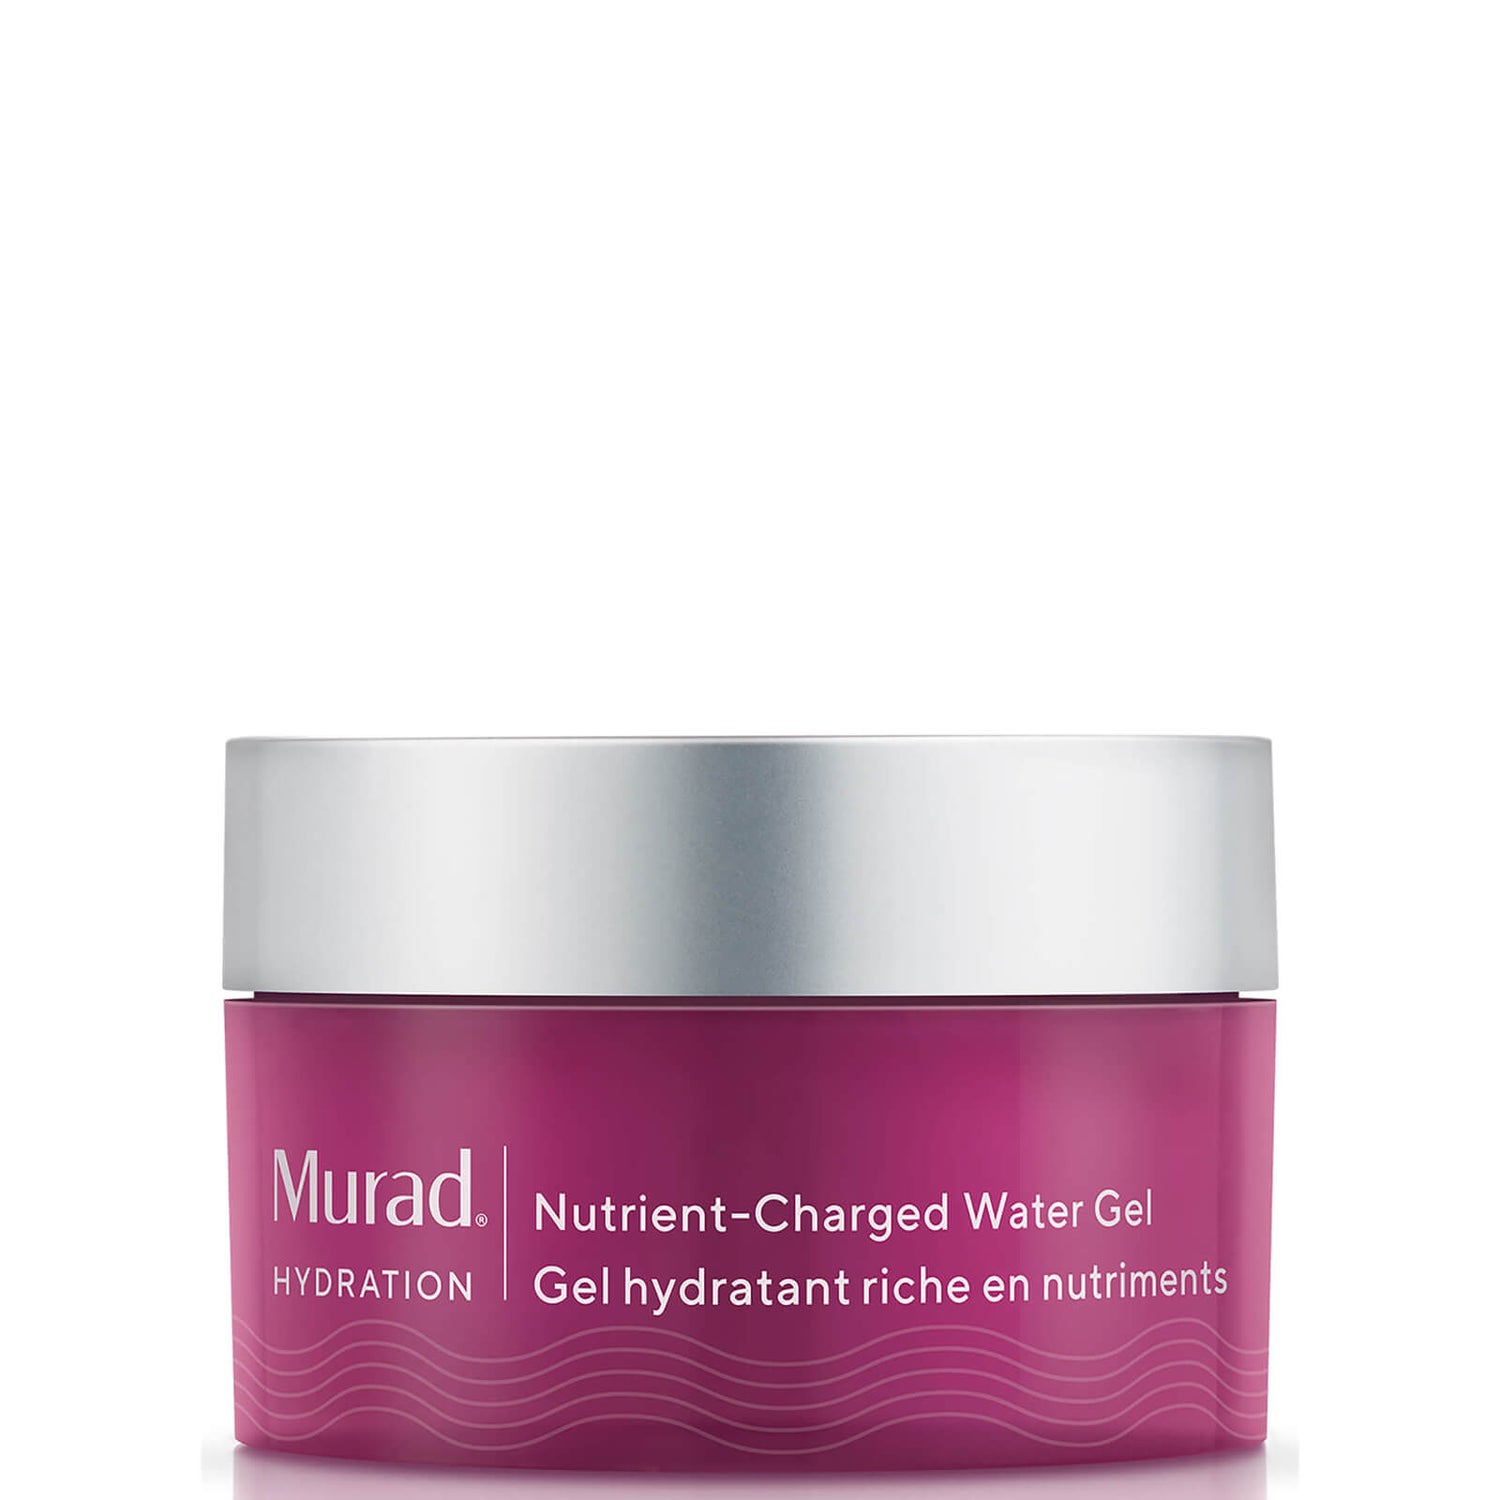 Увлажняющий гель для лица Murad Nutrient Charged Water Gel, 50 мл